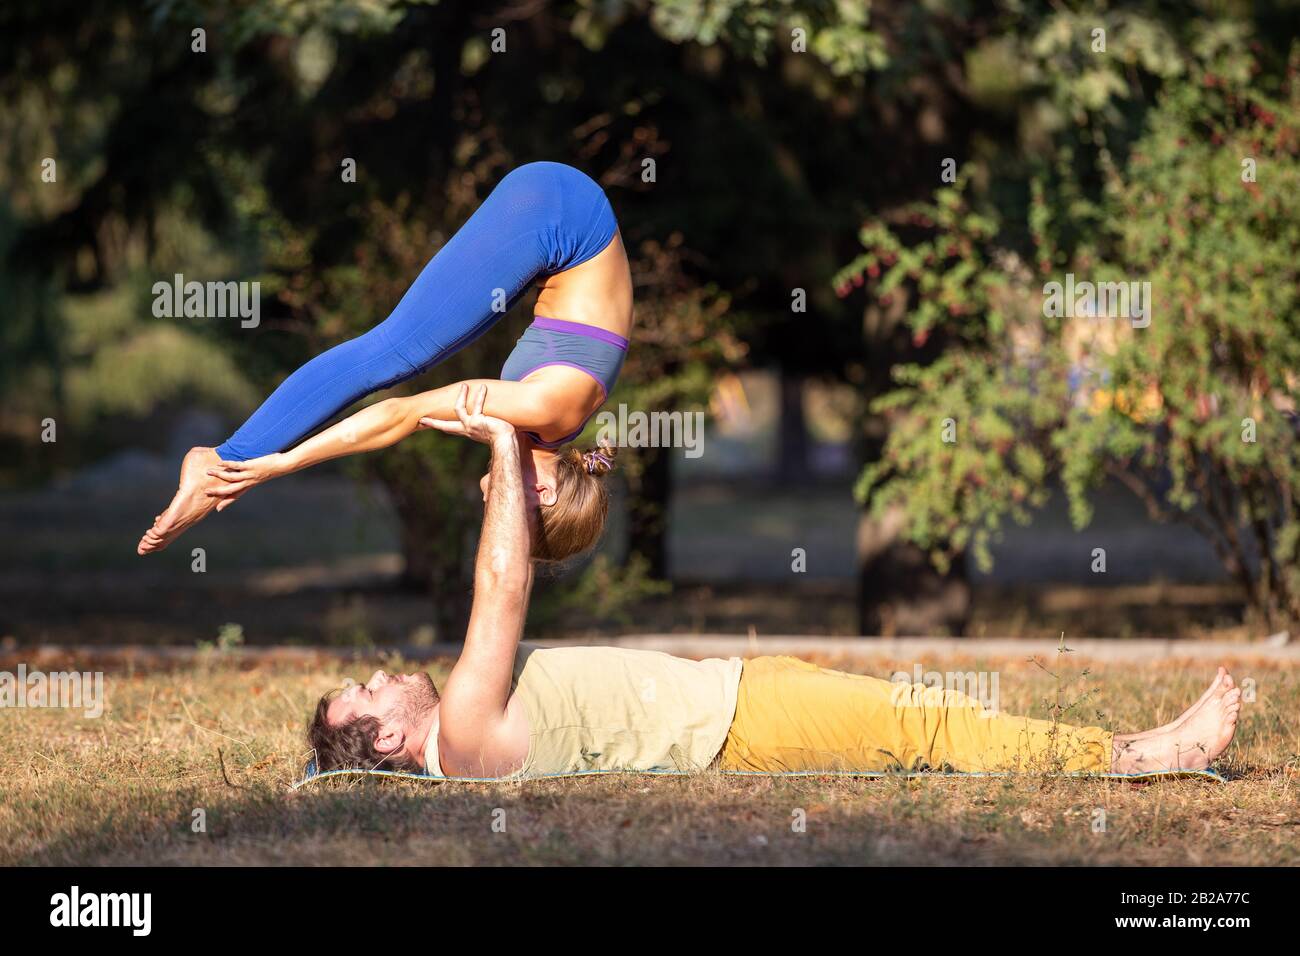 Acro Yoga | Acro yoga poses, Yoga poses advanced, Yoga poses for beginners